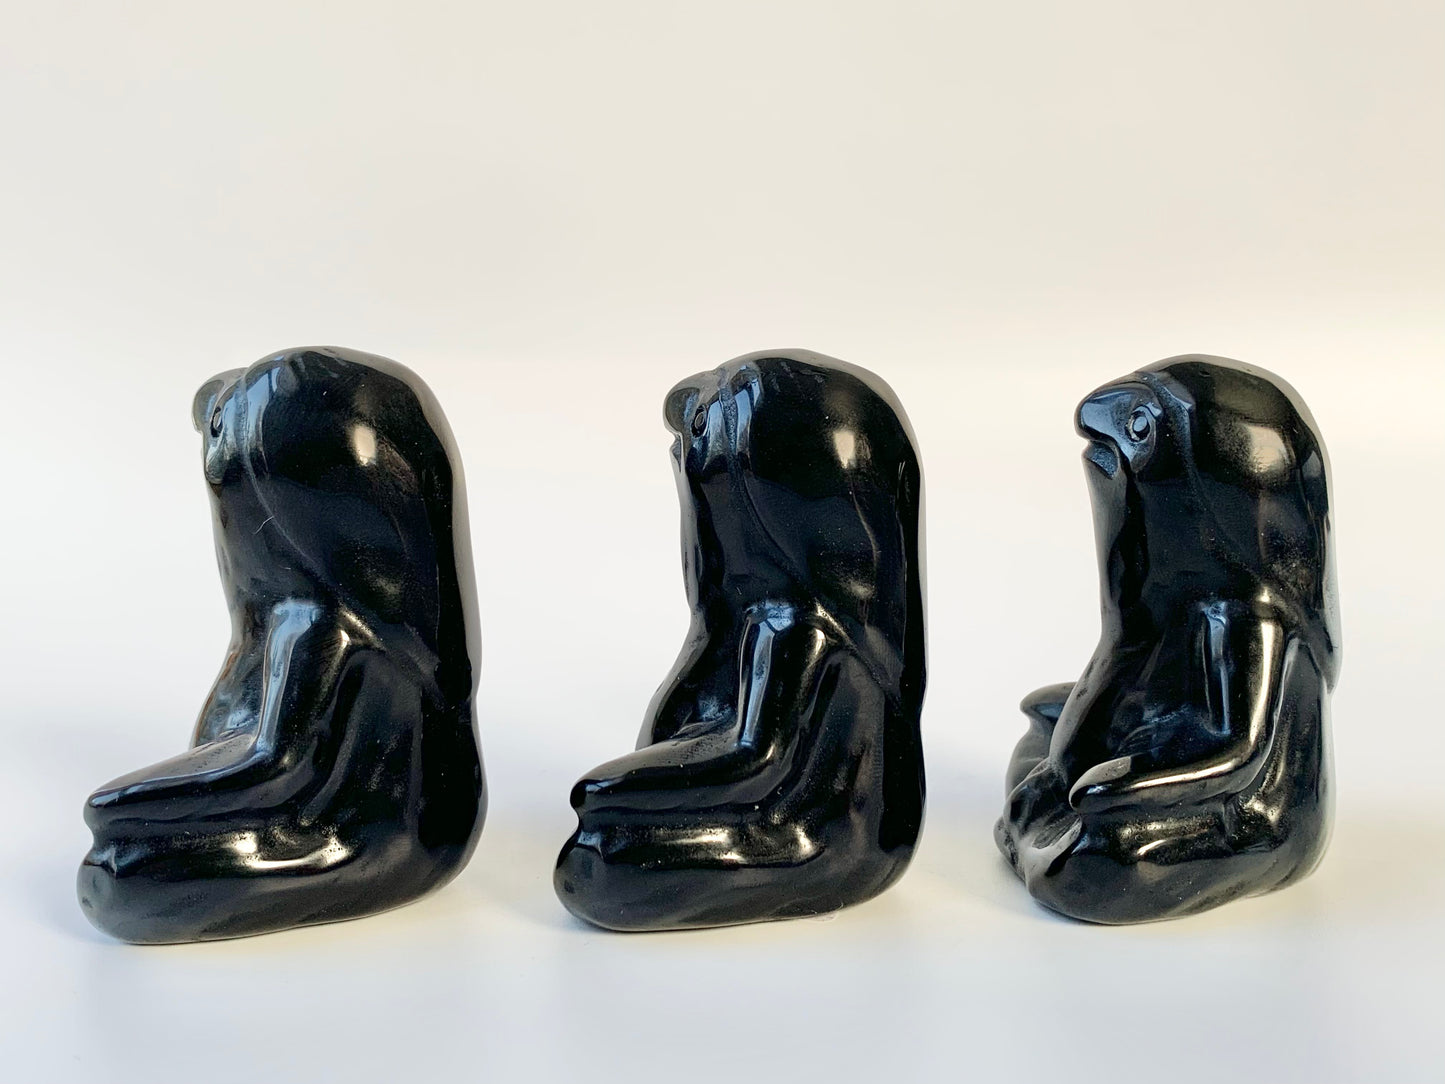 Sloth Carving, Shiny Black Obsidian